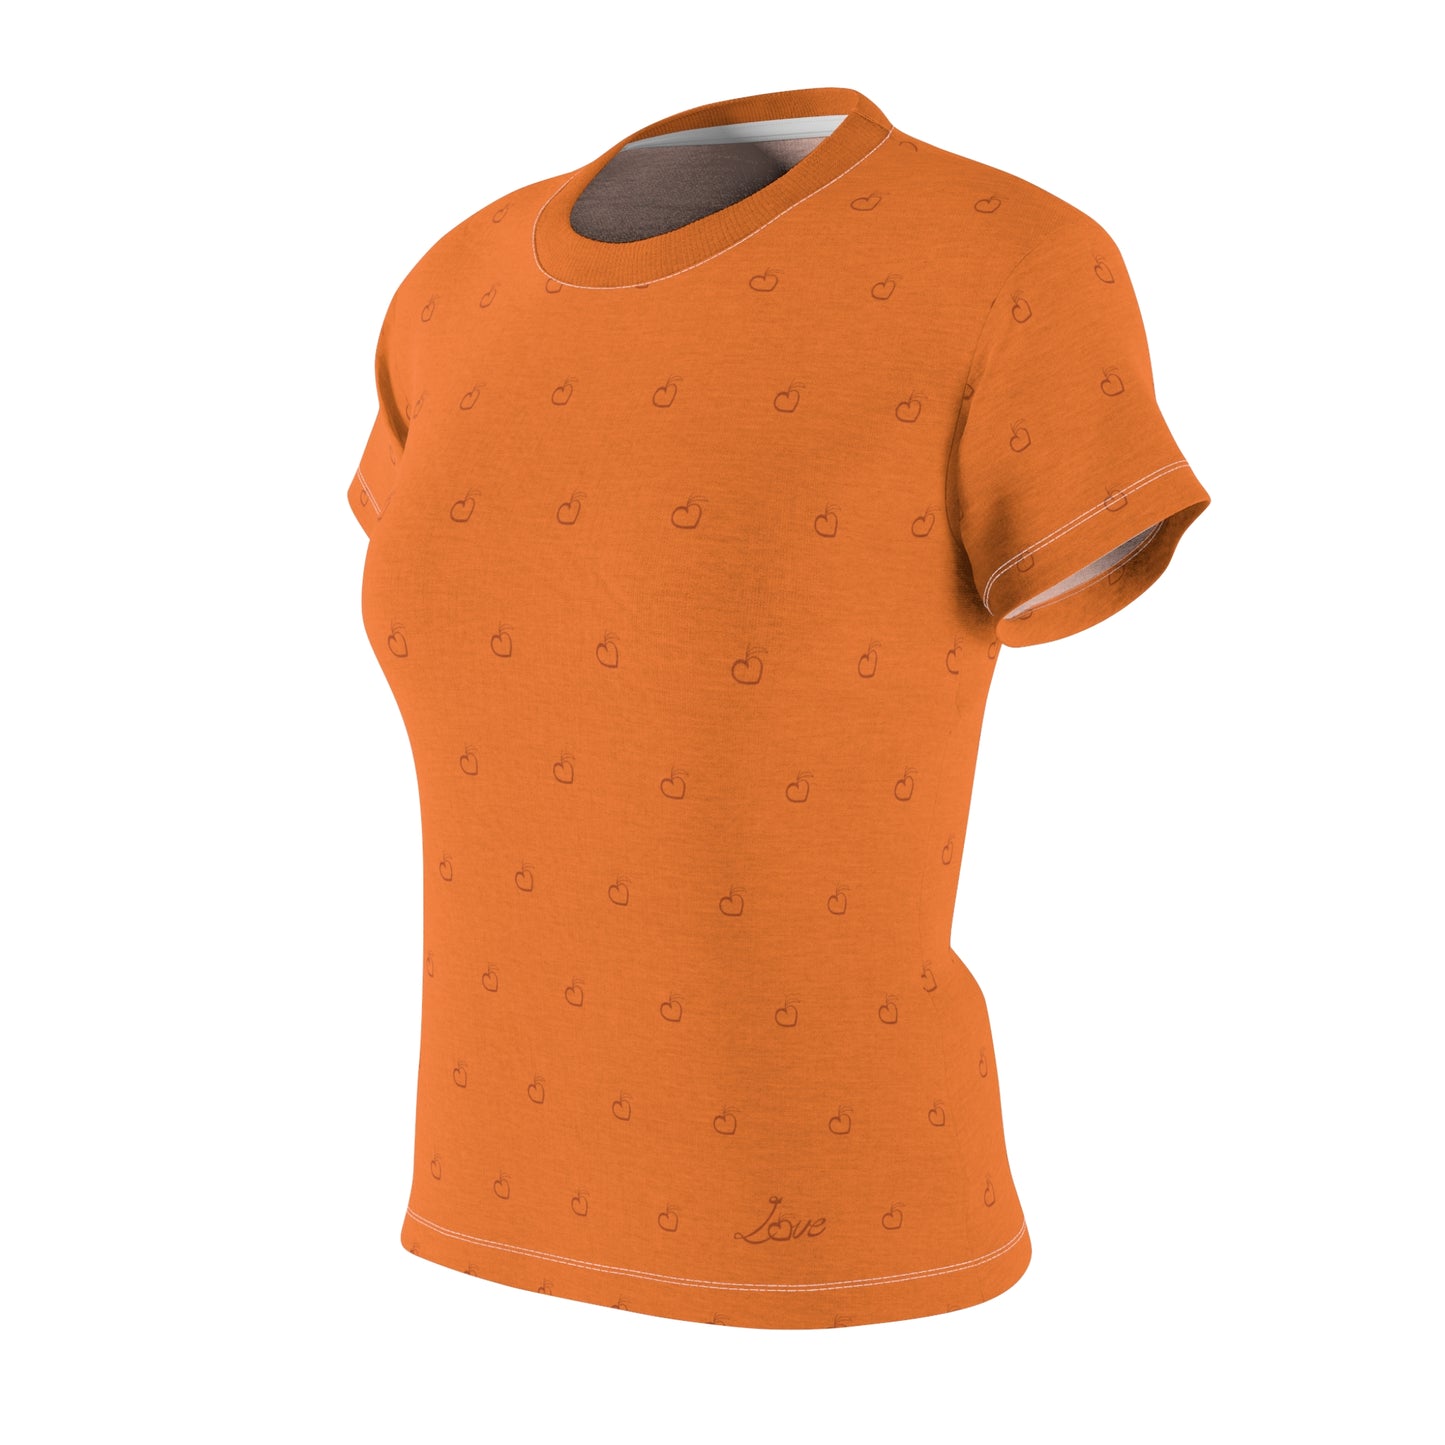 Love Women's T-Shirt (Peach)